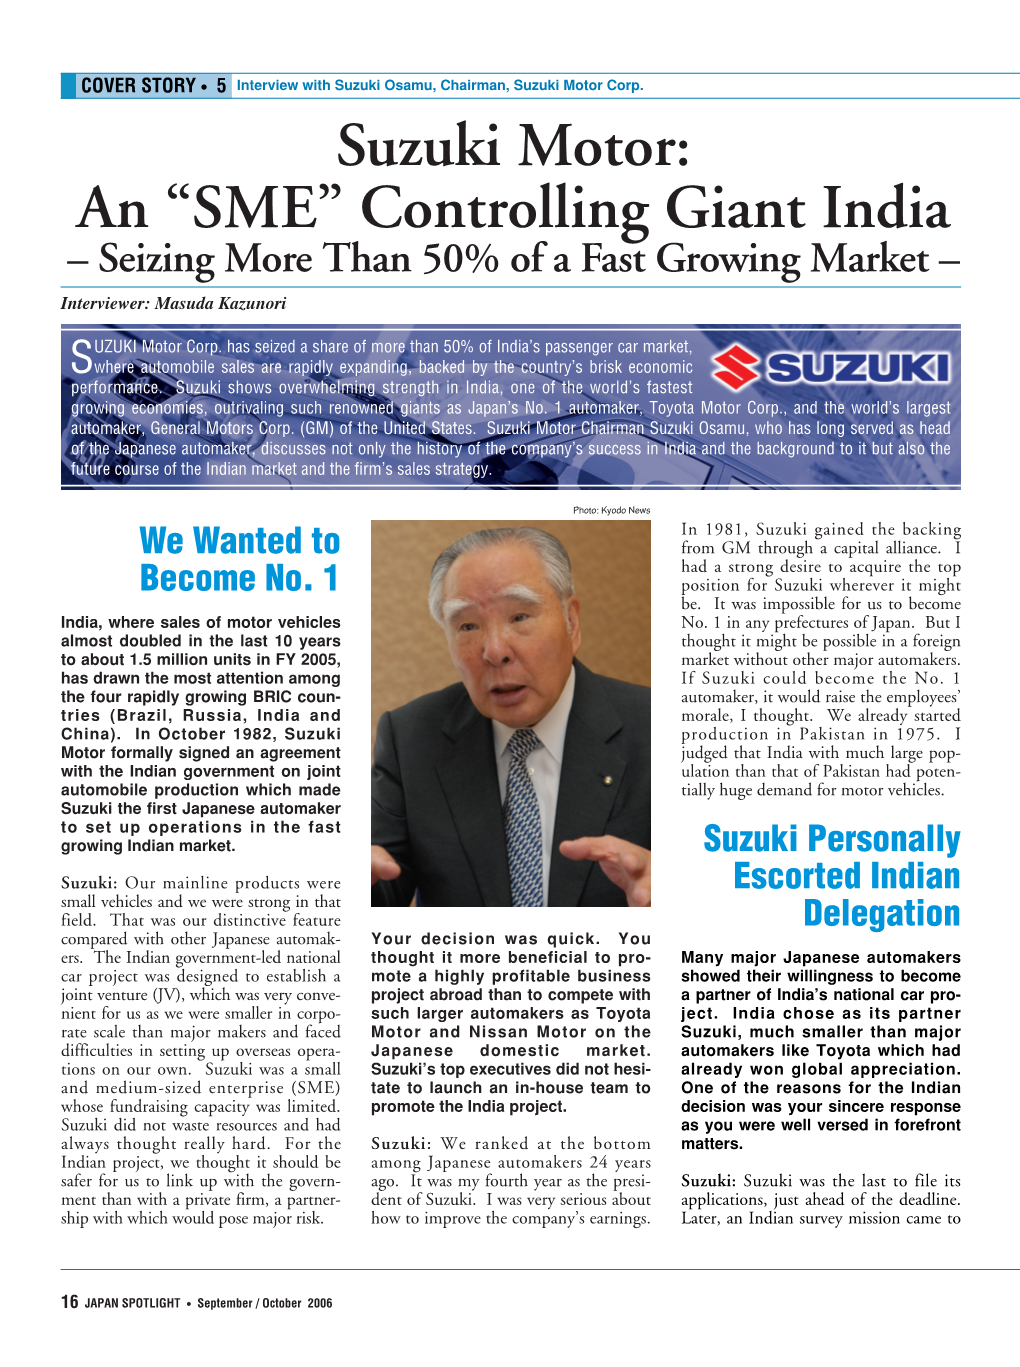 Suzuki Motor: an “SME” Controlling Giant India – Seizing More Than 50% of a Fast Growing Market – Interviewer: Masuda Kazunori